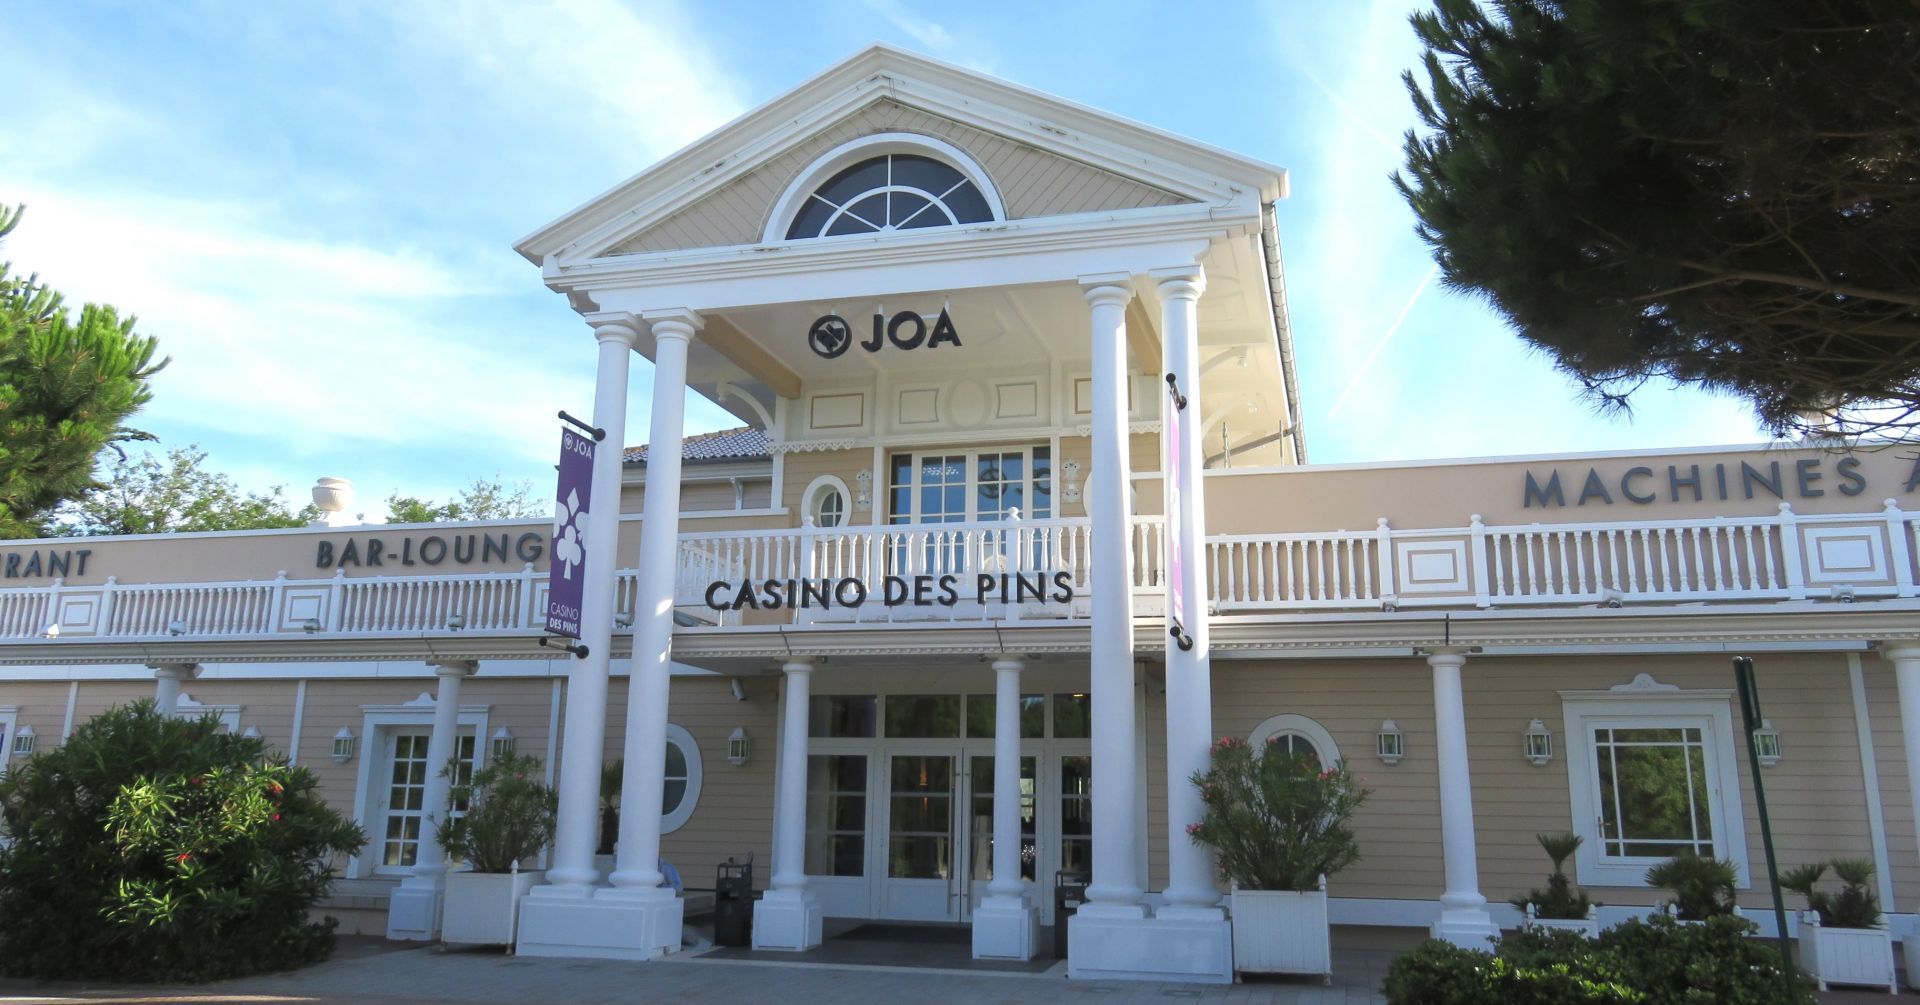 Casino JOA Les Sables d'Olonne Les Pins